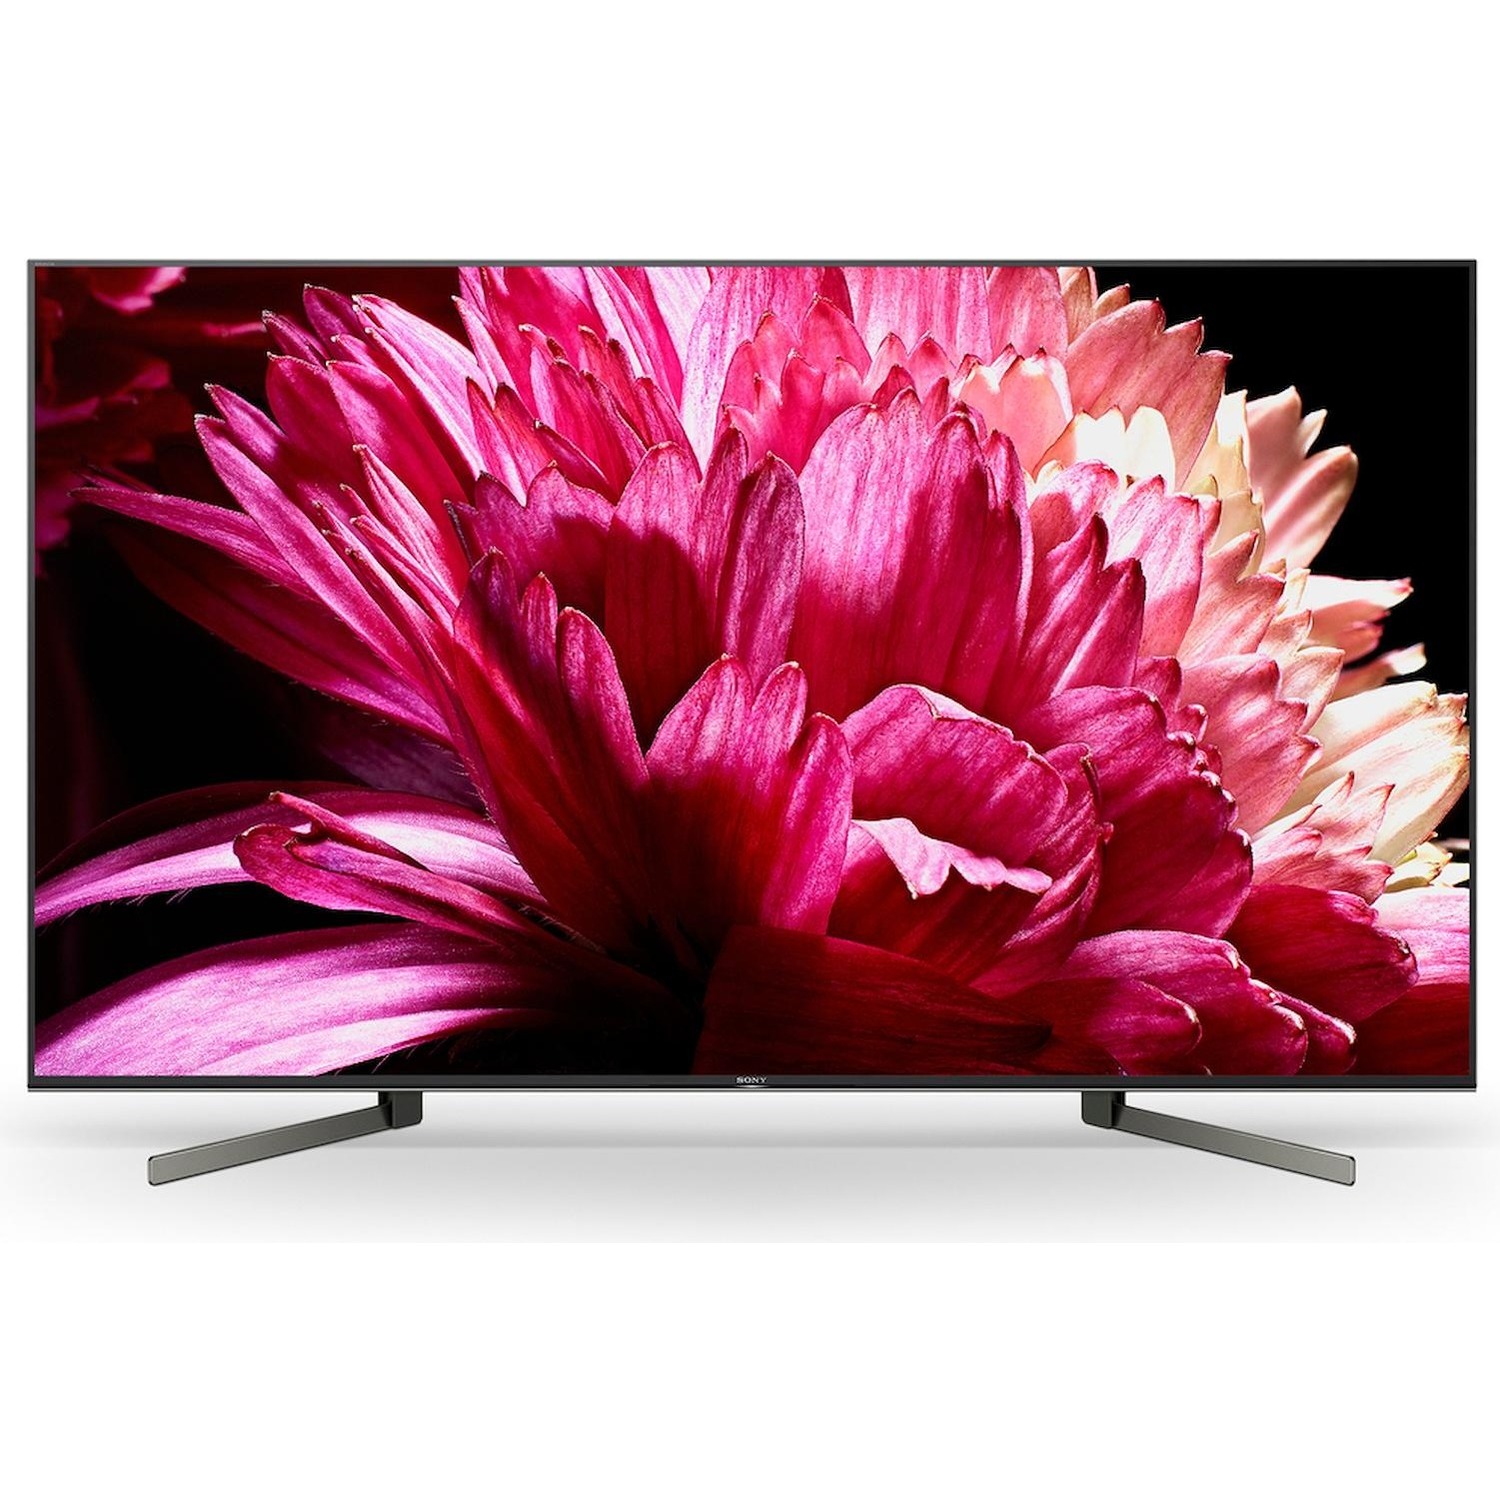 Immagine per TV LED Smart 4K UHD Sony 55XG9505B da DIMOStore